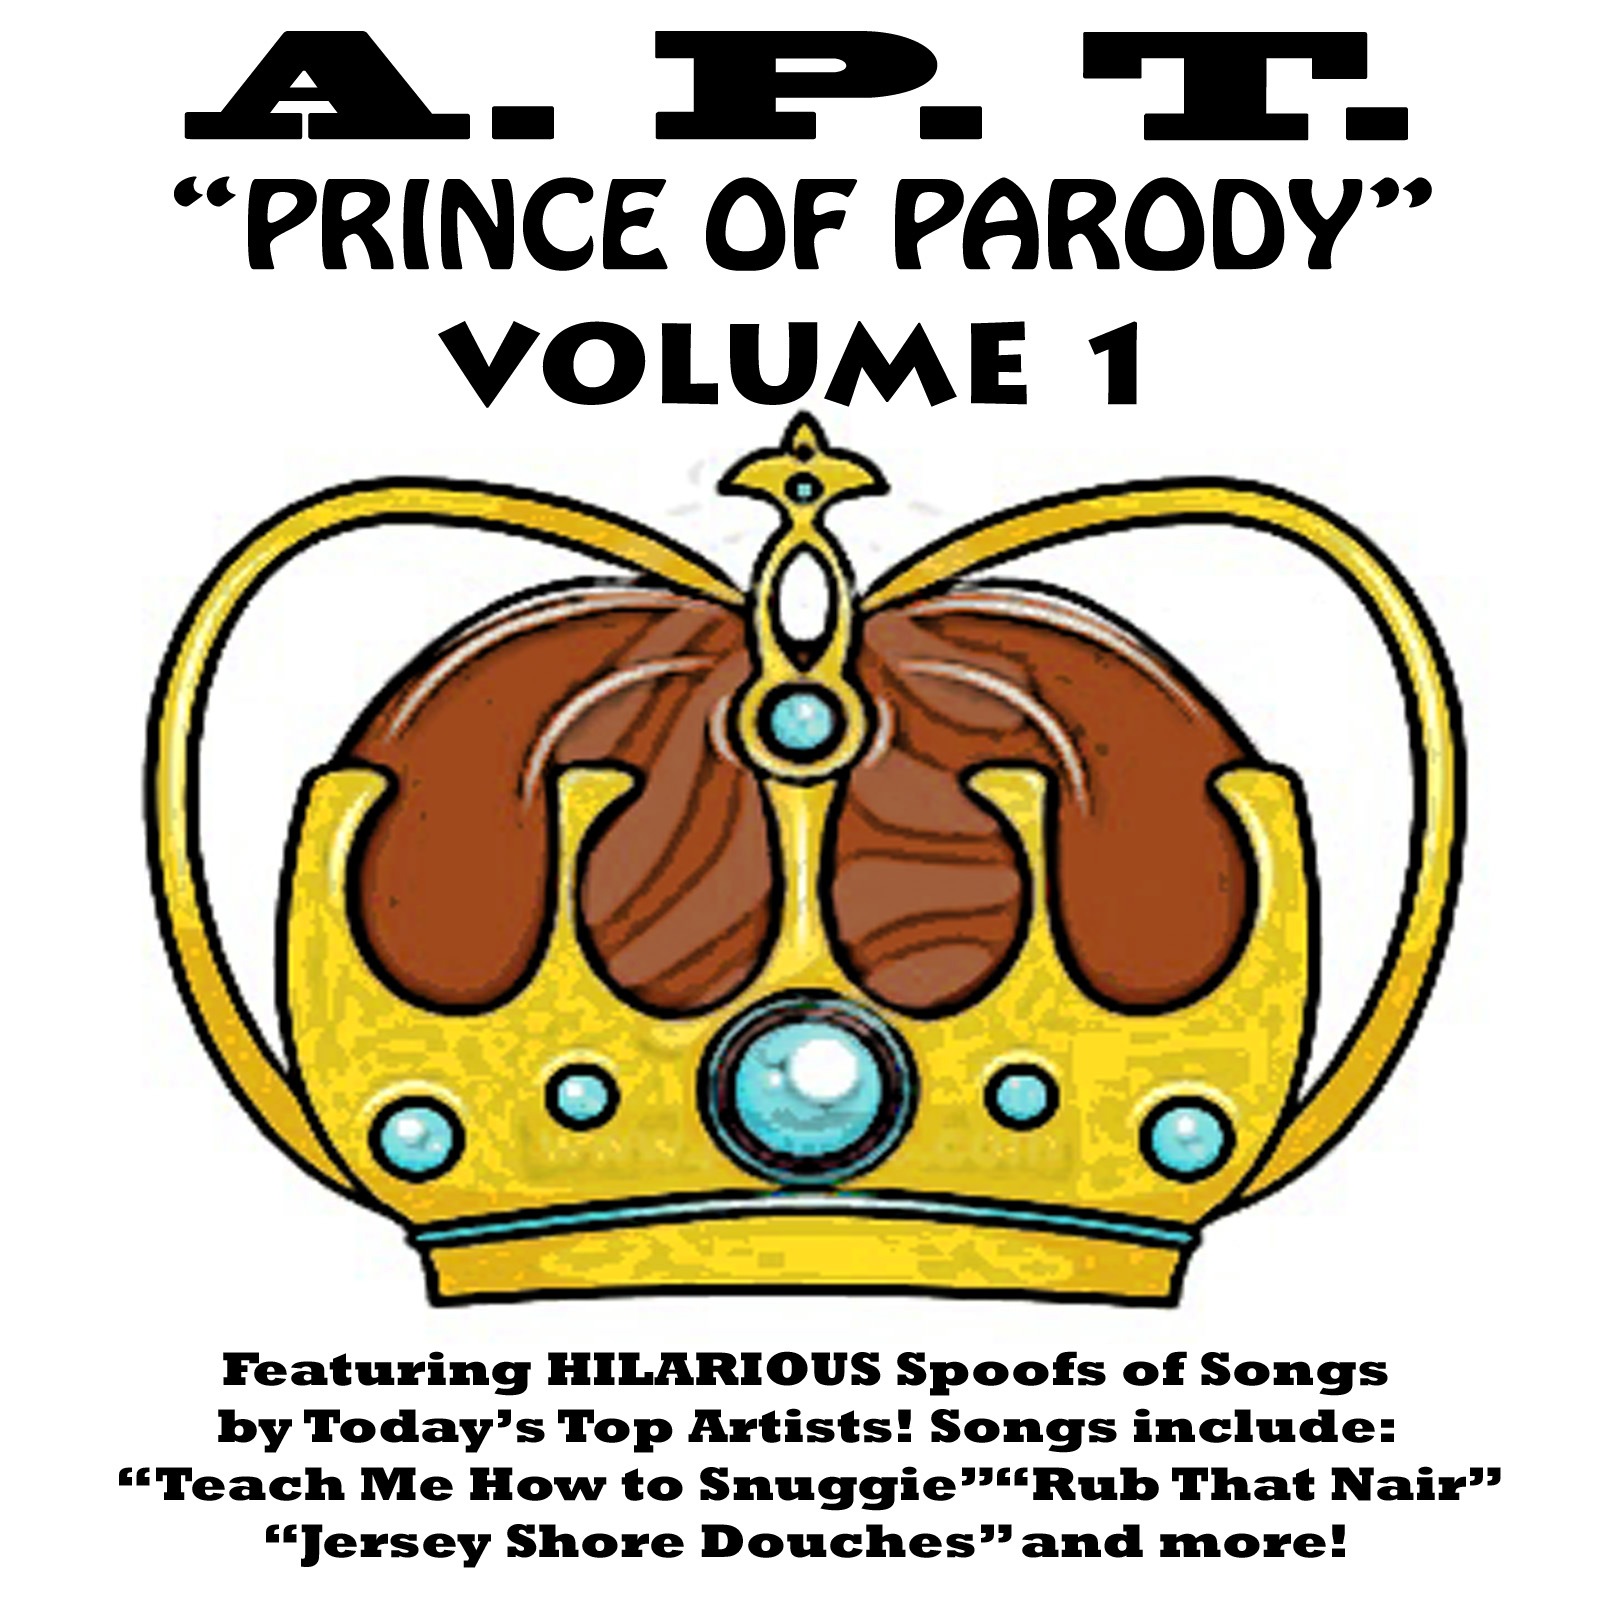 http://2.bp.blogspot.com/_qYN7BmgyCzo/TOXSQa2xtOI/AAAAAAAAAAM/pdV9M2fBCOI/s1600/APT+Album+Cover+-+Prince+of+Parody+Volume+1.jpg